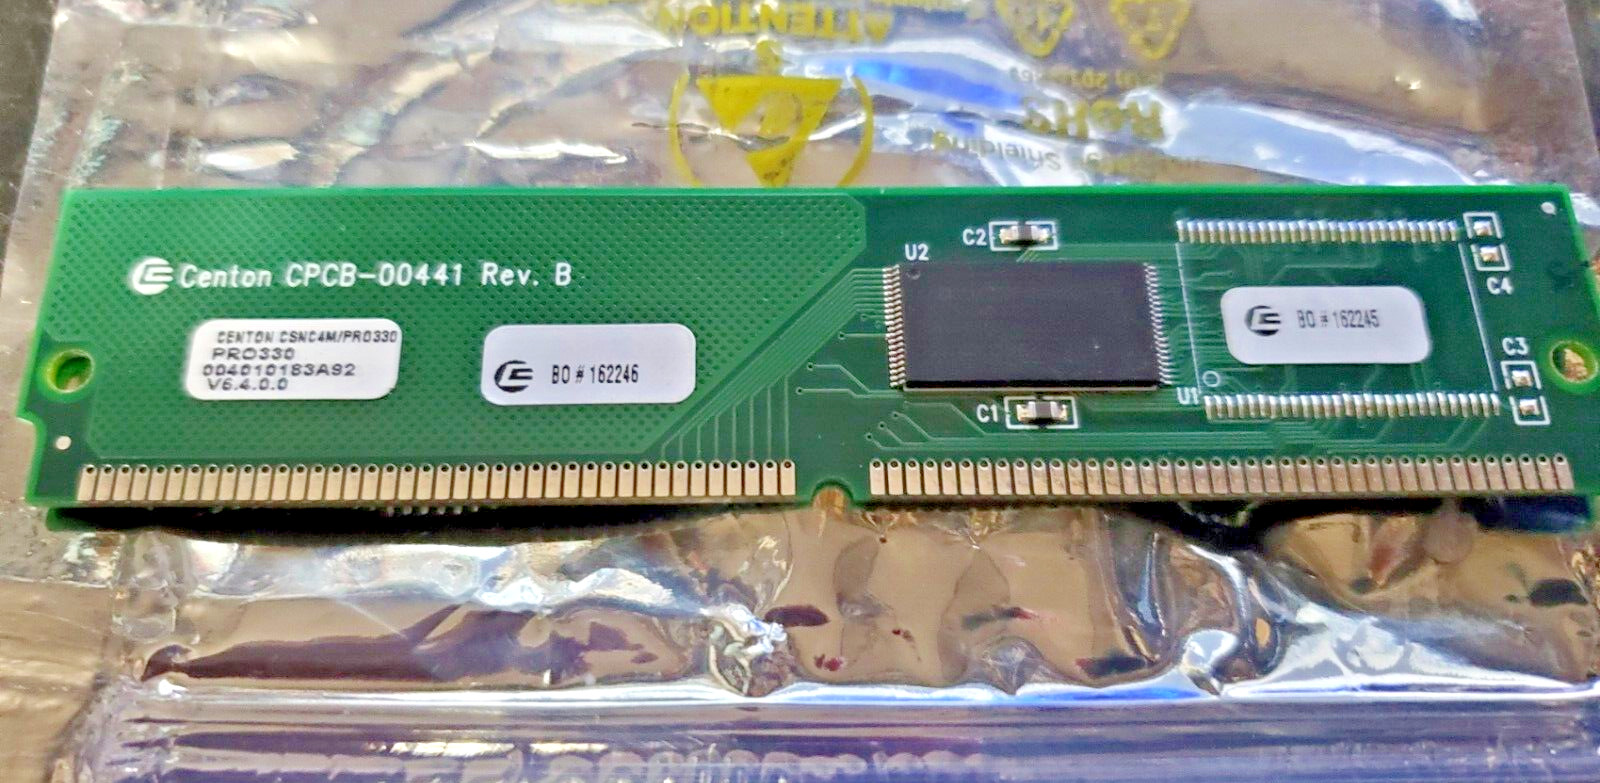 4 MB 160 pin Memory module CENTON CSNC4M/Pro330 V6.4.0.0 1998 date code